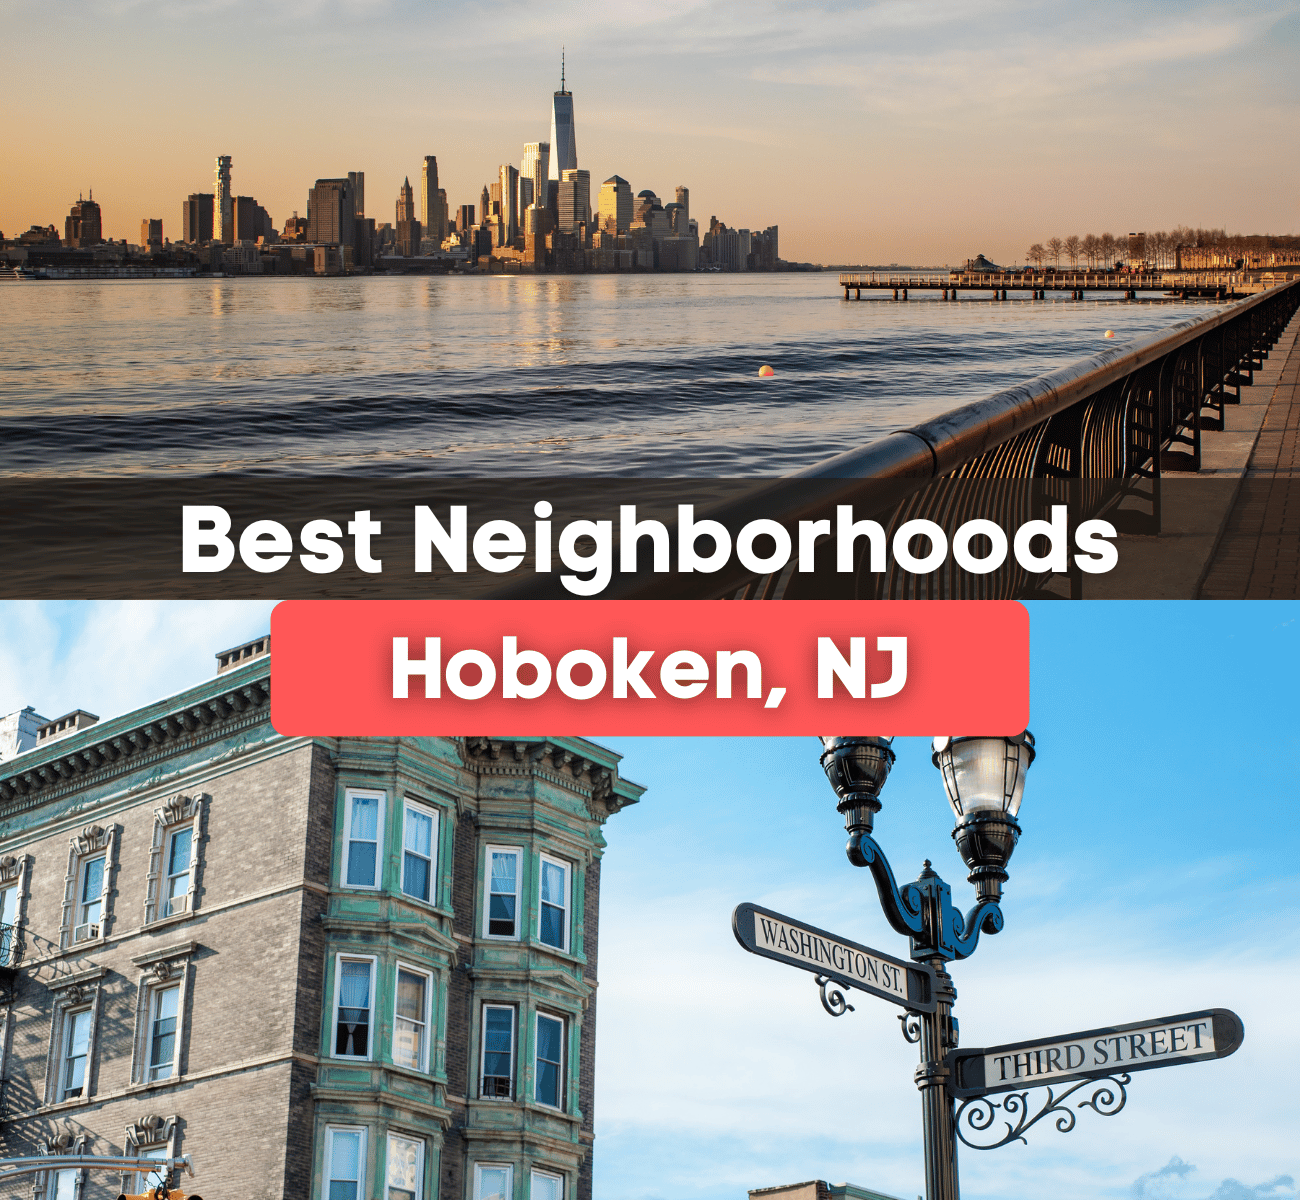 Hoboken, NJ waterfront and city street 